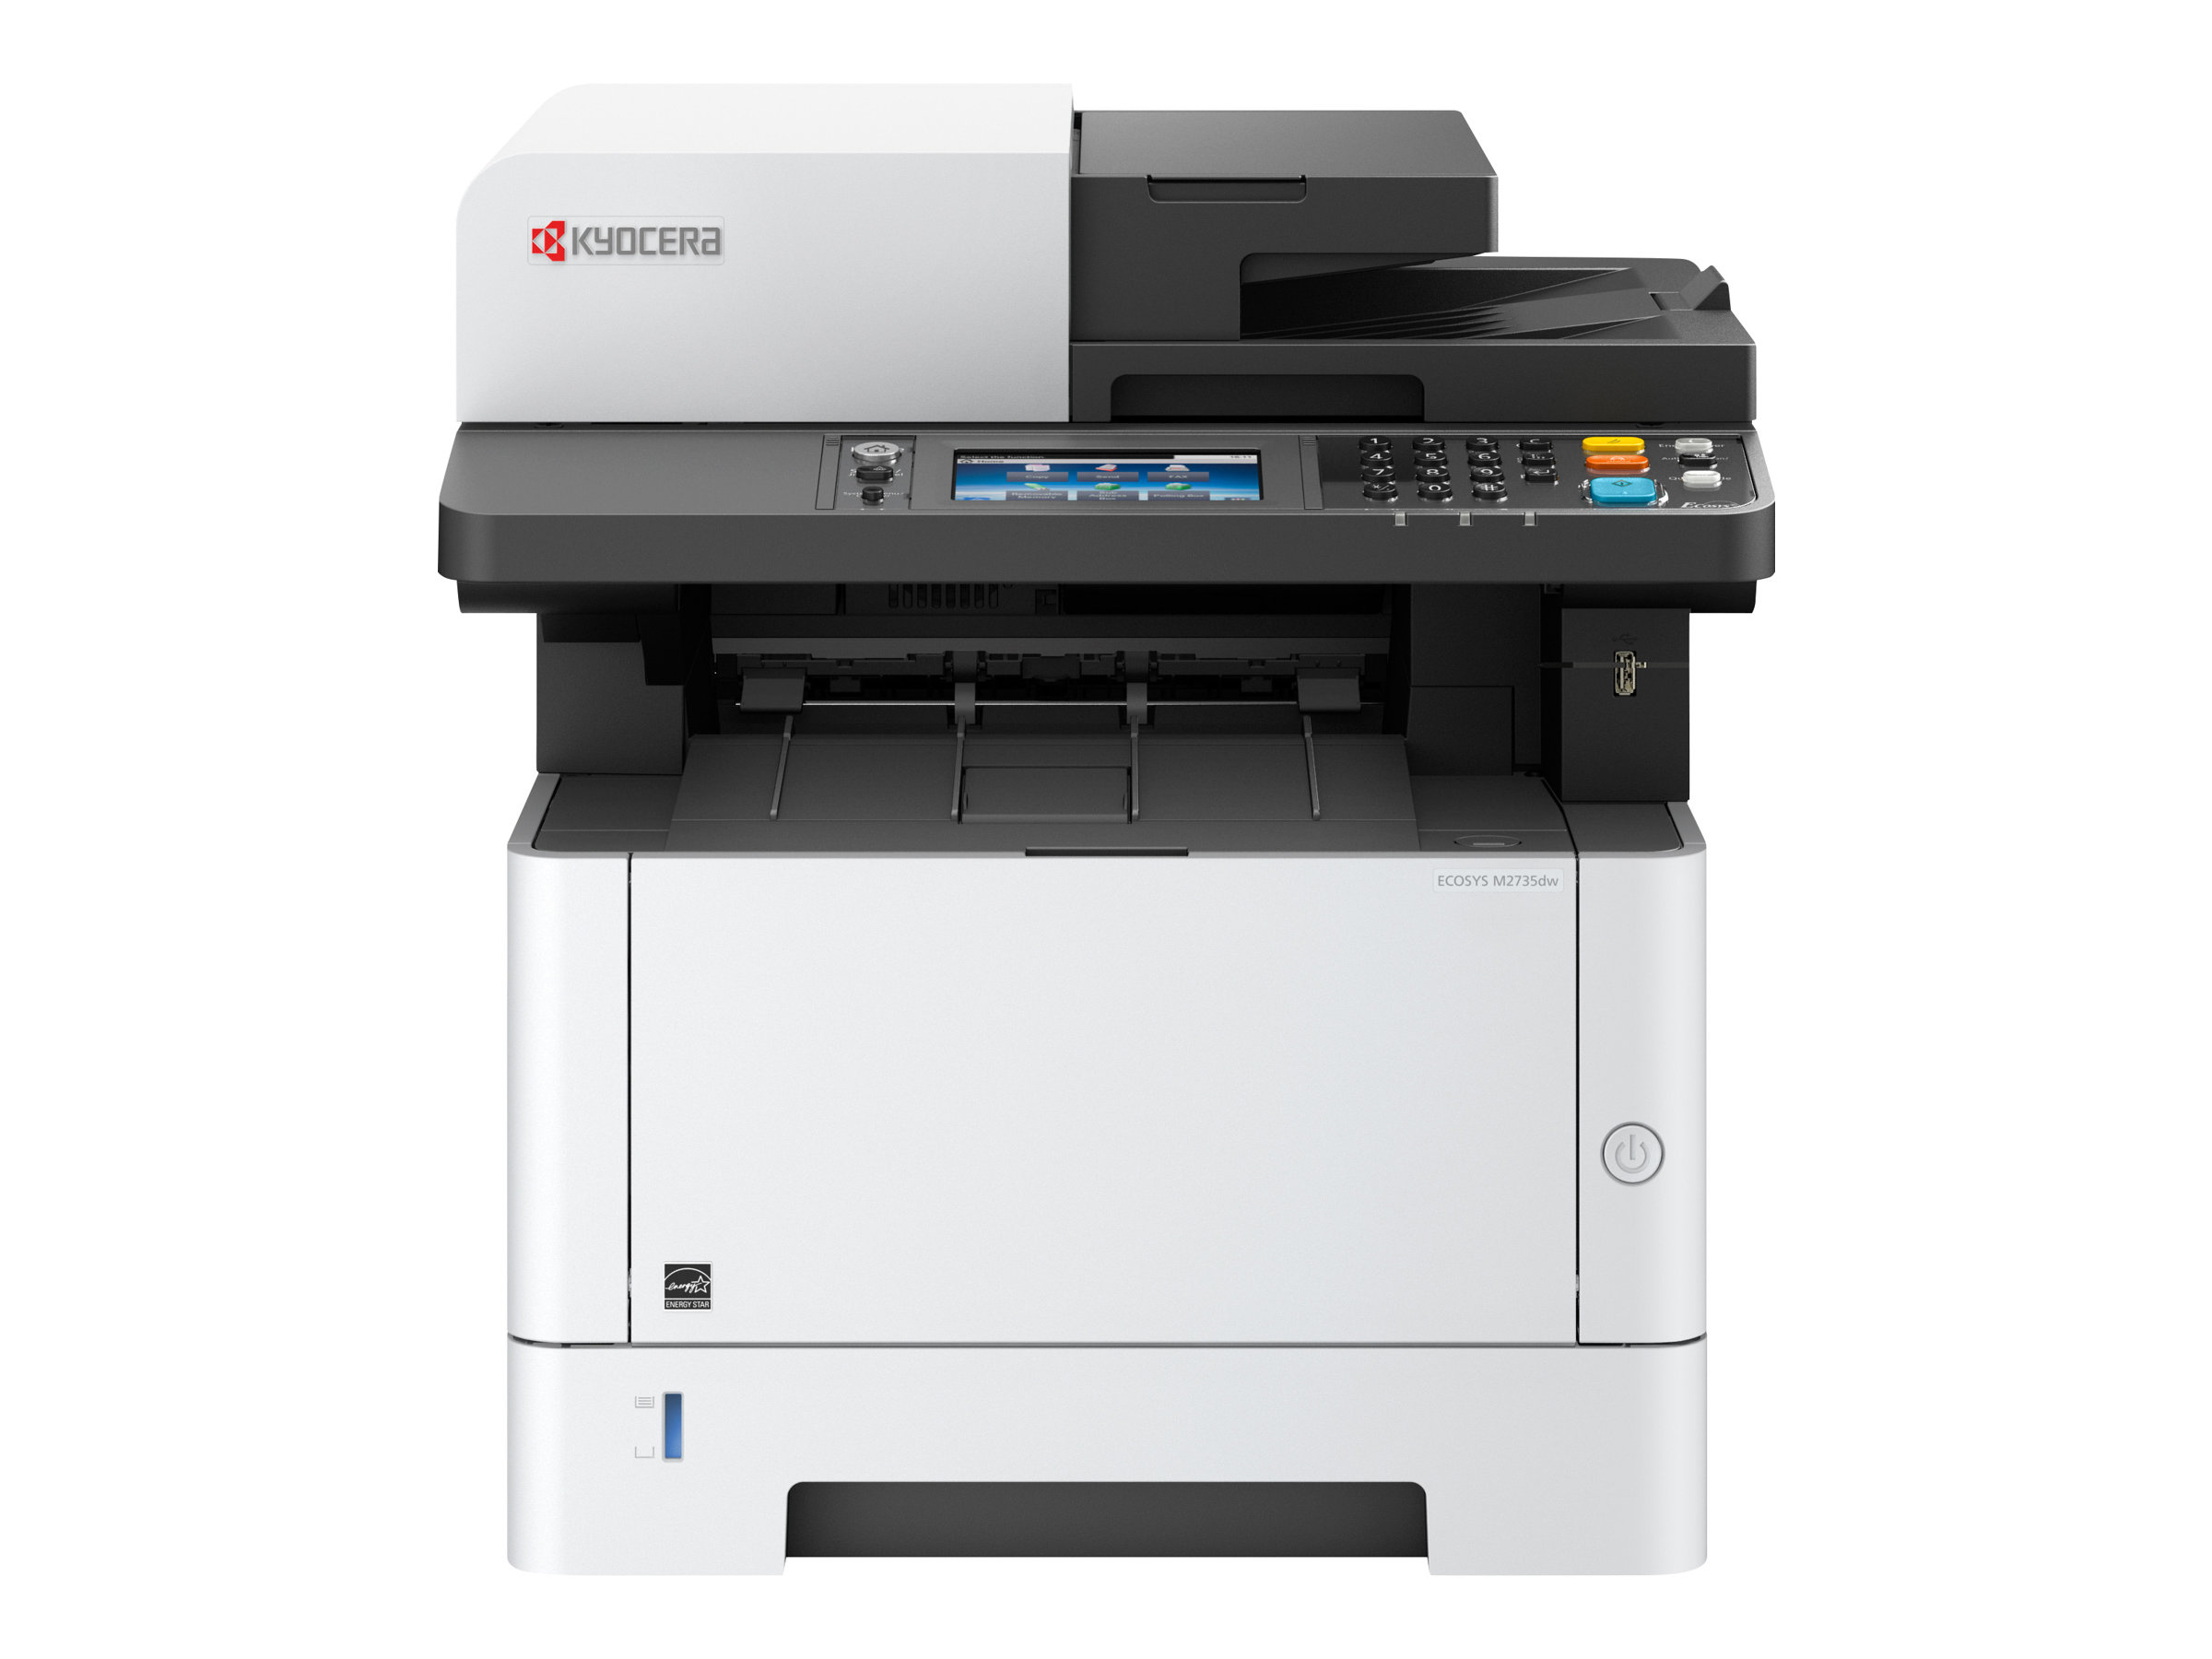 Kyocera ECOSYS M2735dw - Multifunktionsdrucker - s/w - Laser - Legal (216 x 356 mm)